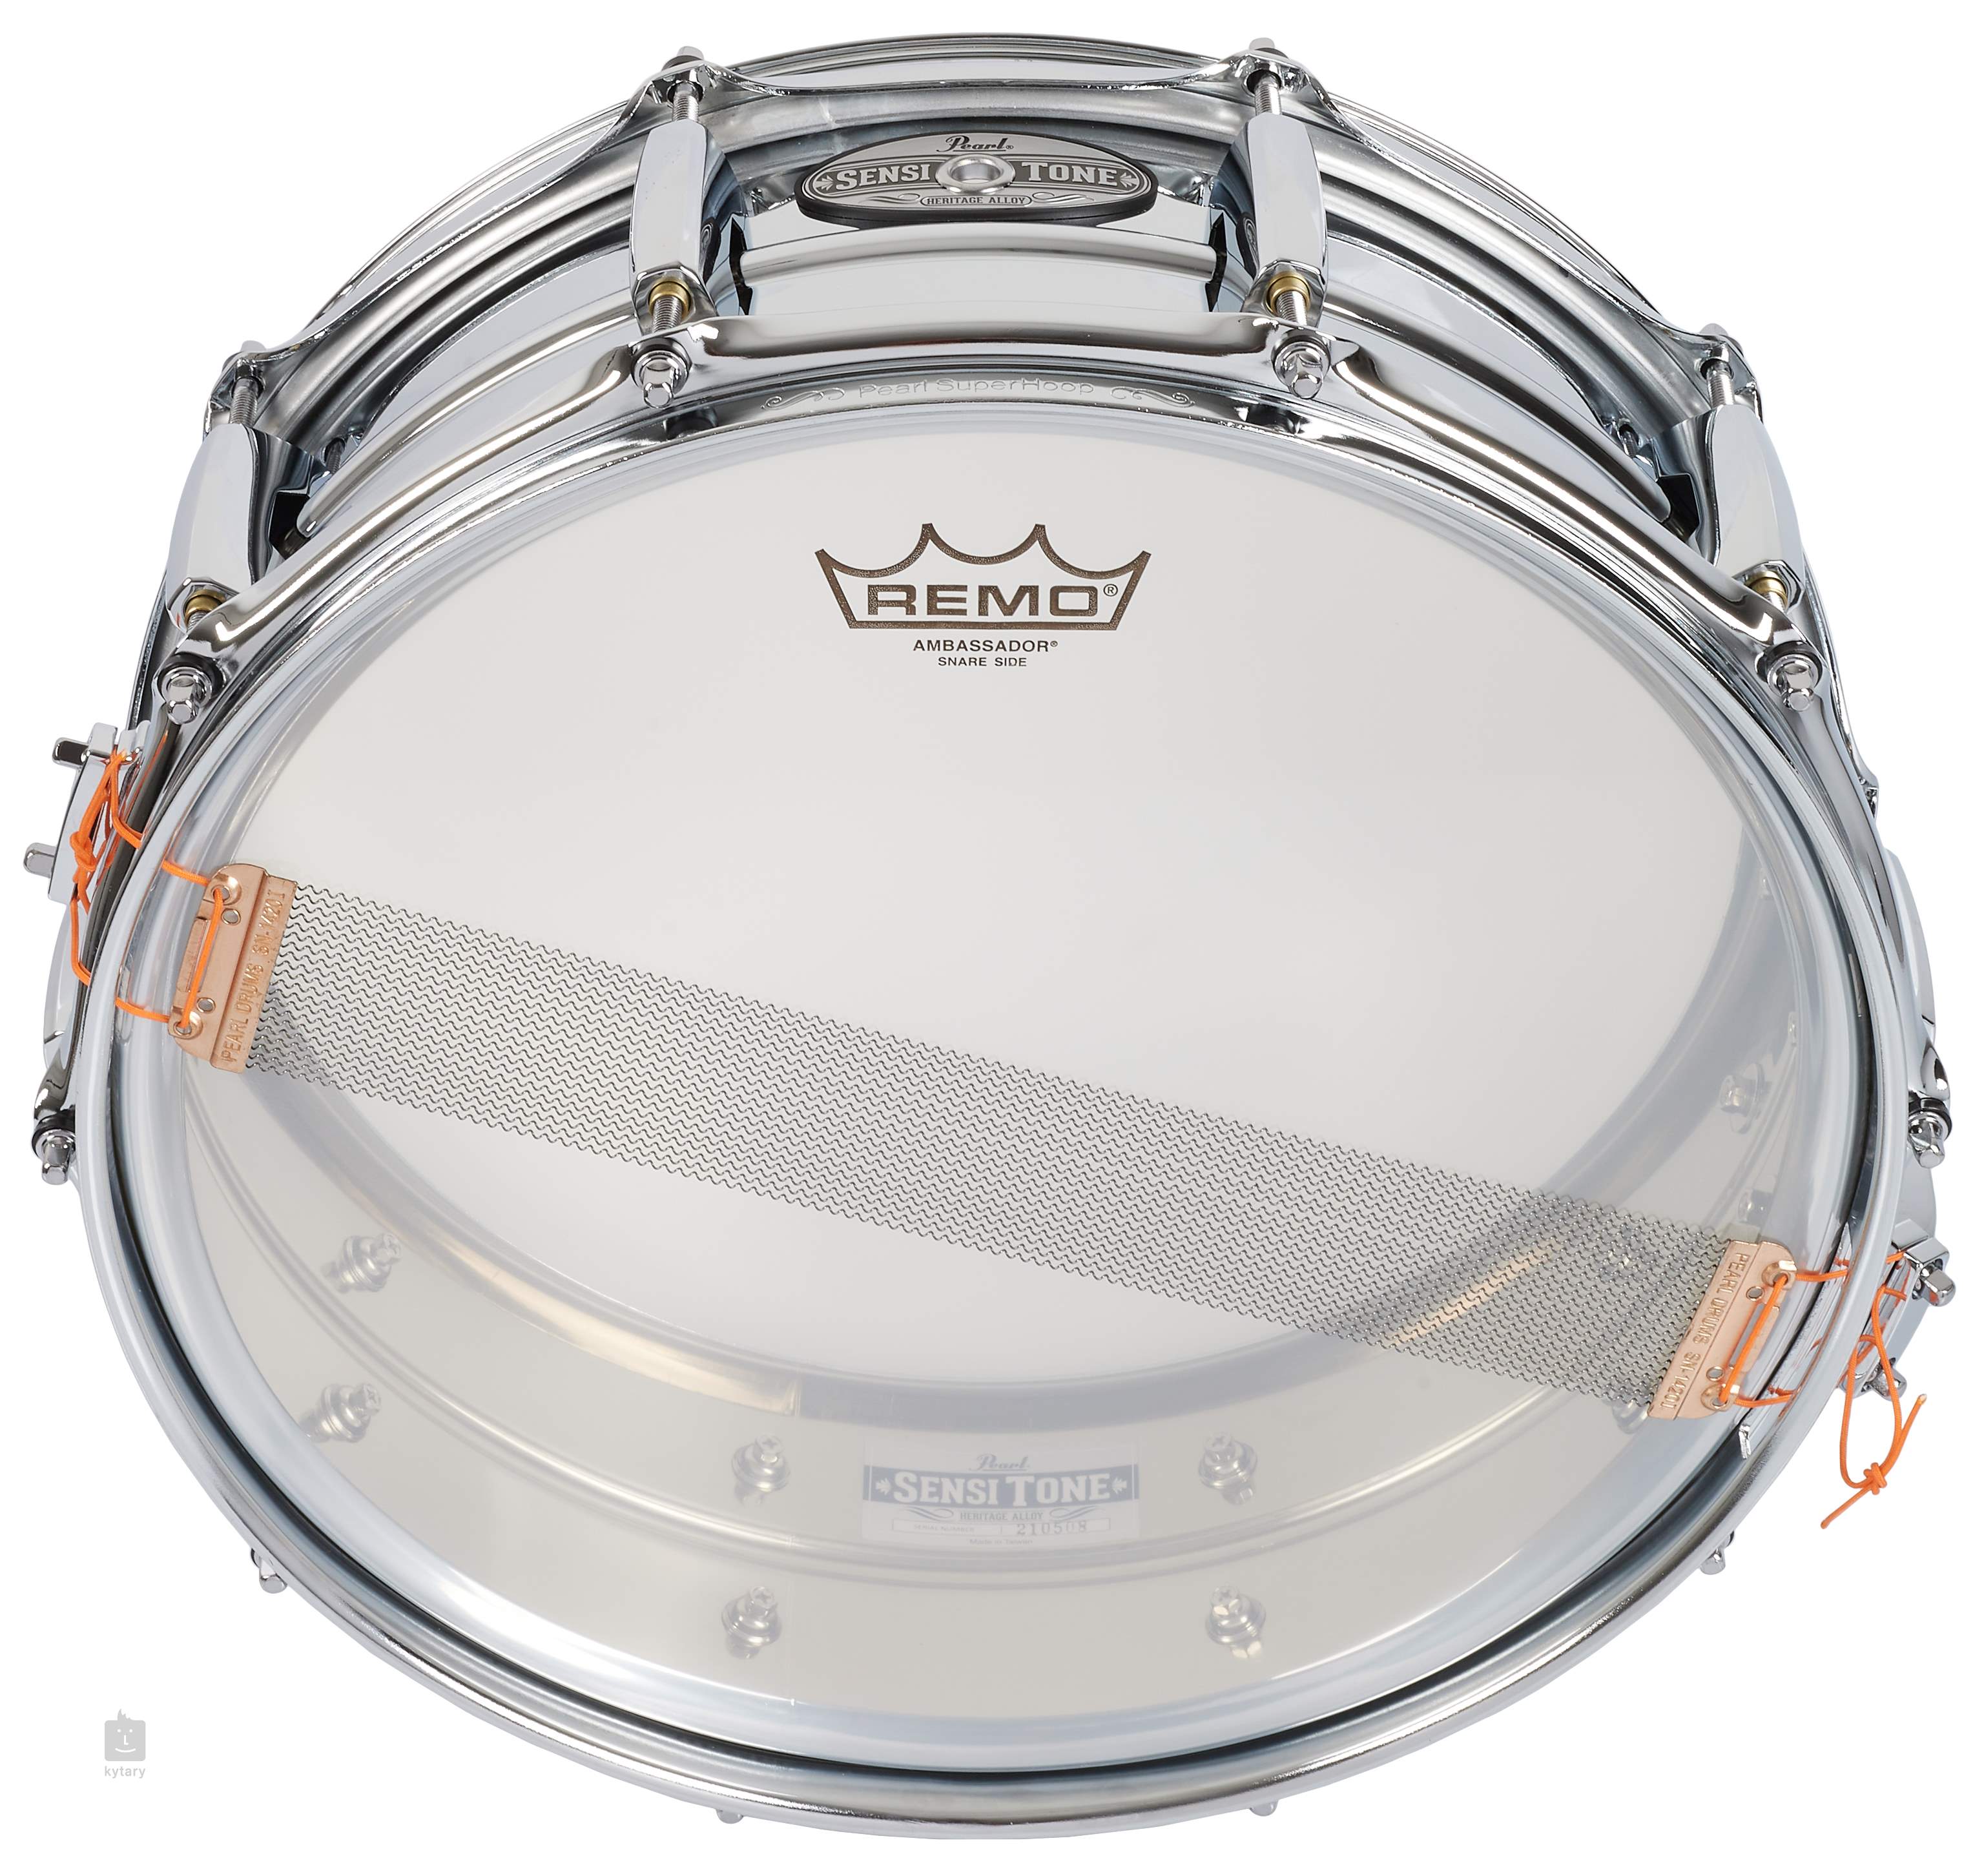 Pearl Sensitone Heritage Steel Alloy Snare Drum - 6.5 x 14-inch